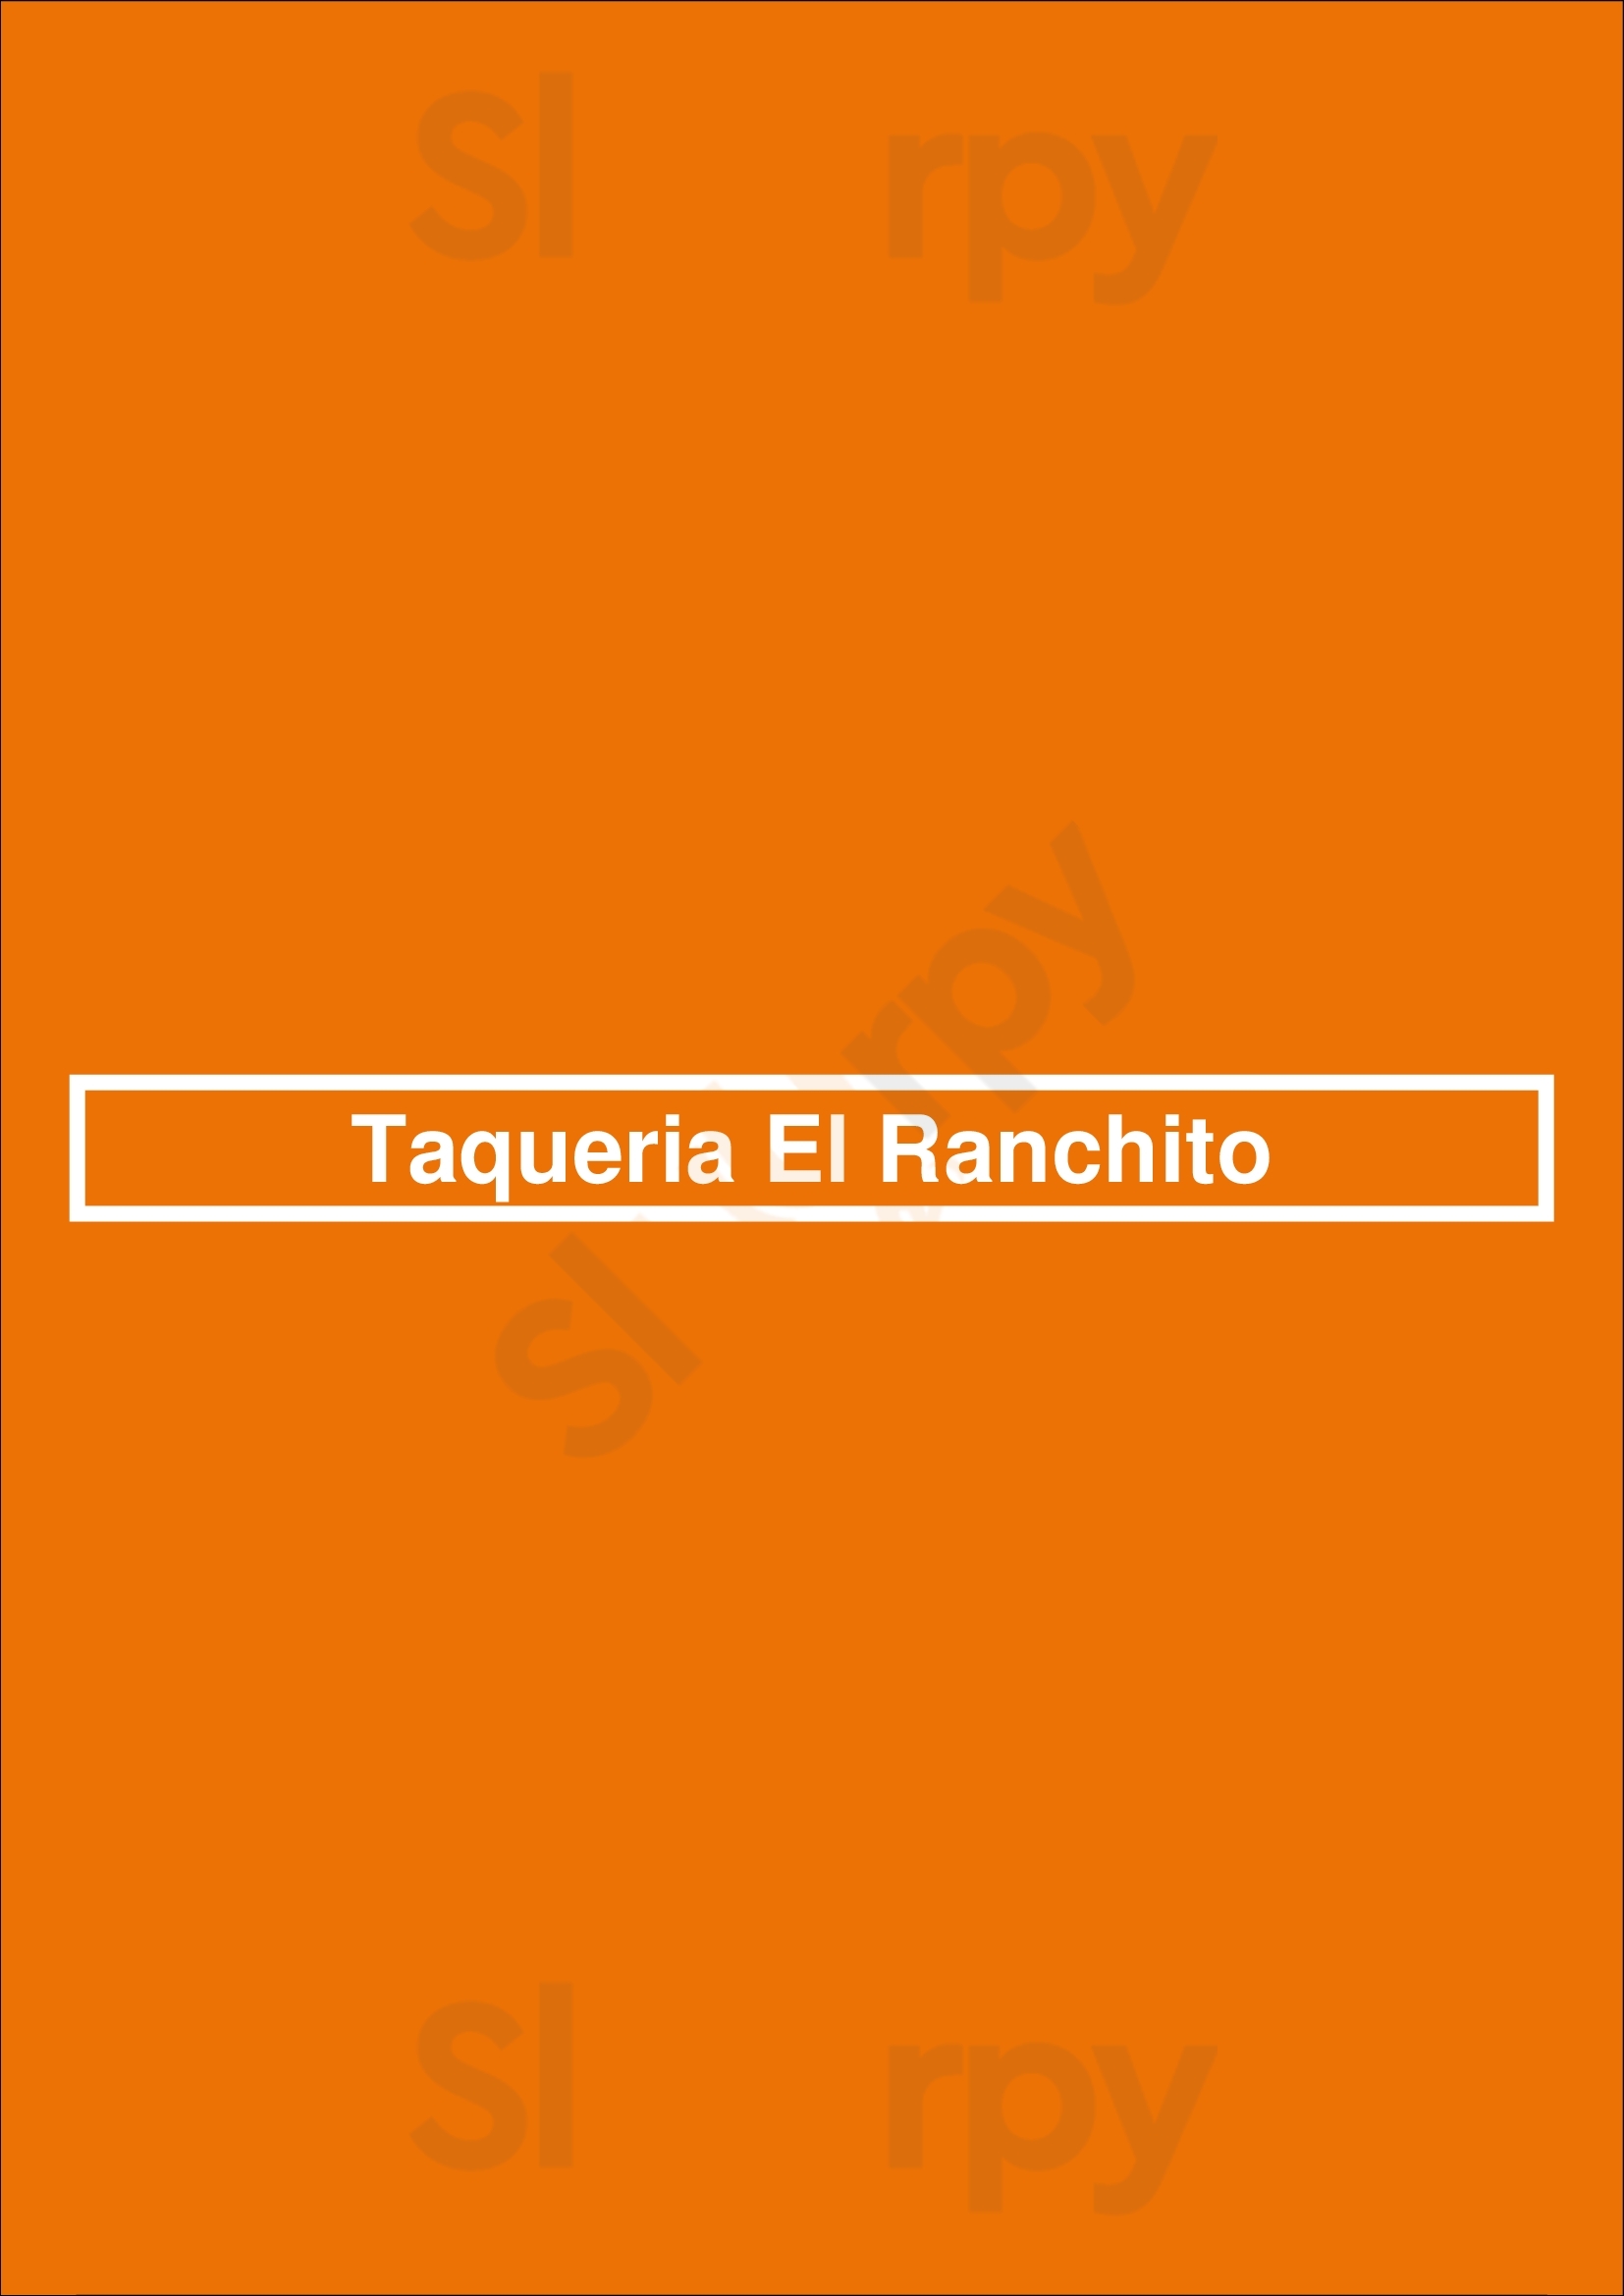 Taqueria El Ranchito Chicago Menu - 1